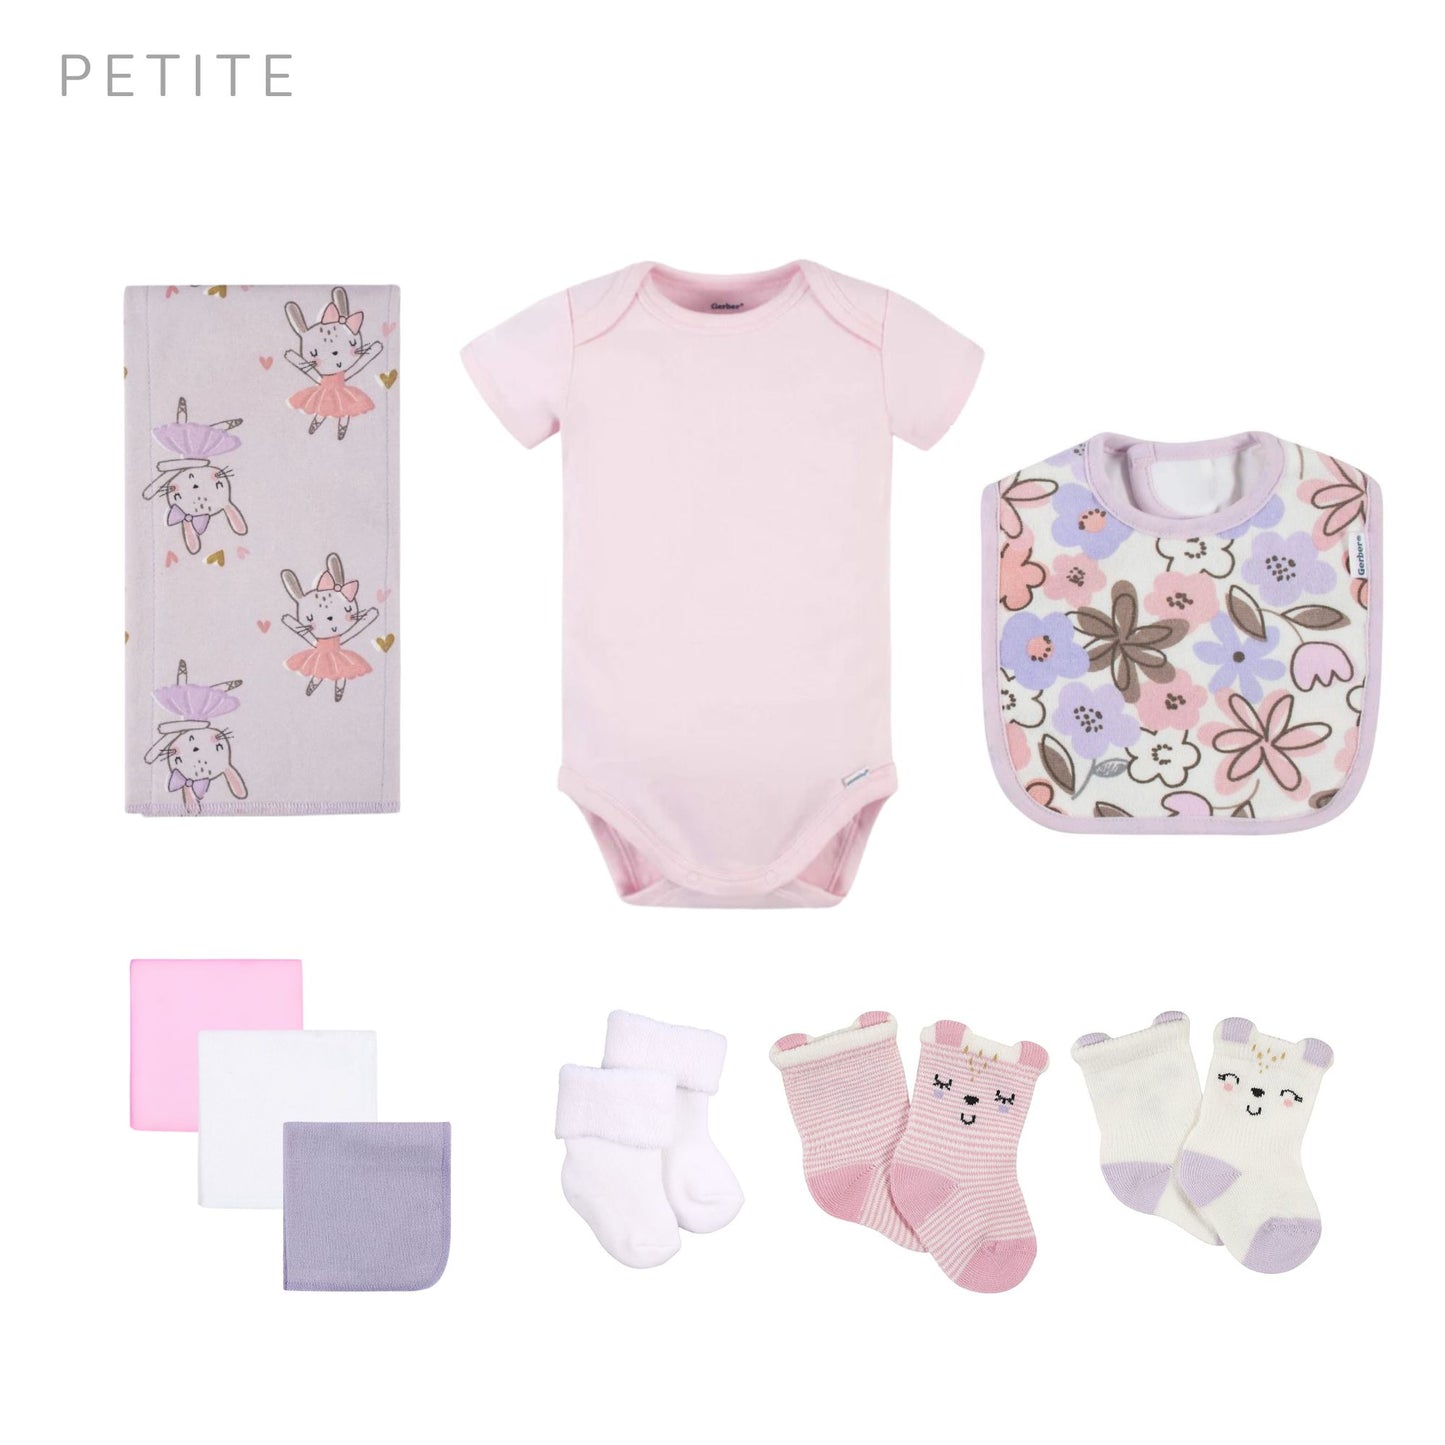 petite baby girl gift box bunny ballerina clothing